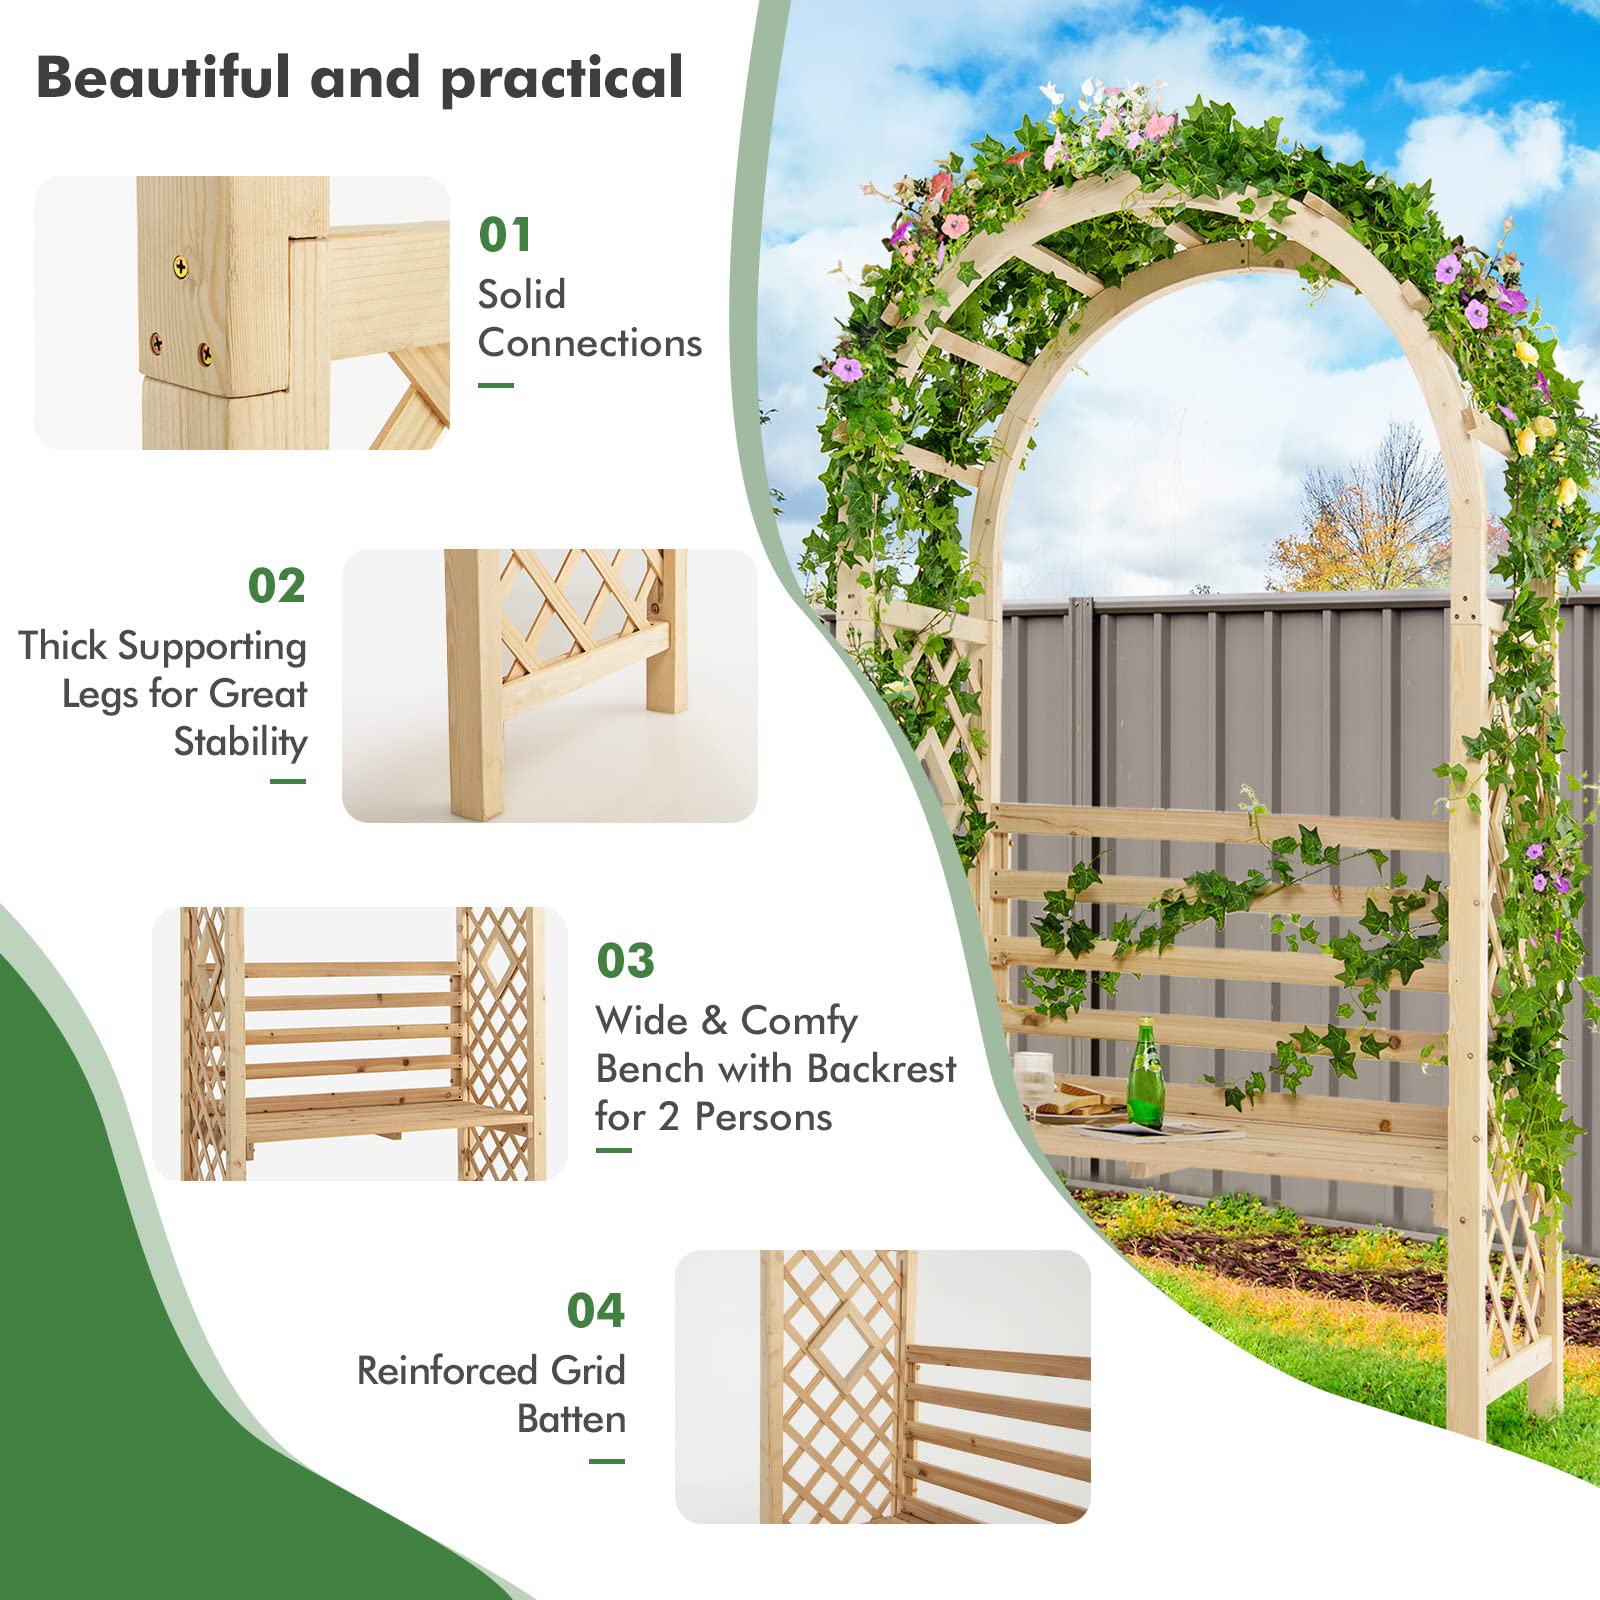 Giantex 81in Garden Arch with 2-Person Bench, Wooden Garden Arbor Archway Trellis for Climbing Plants